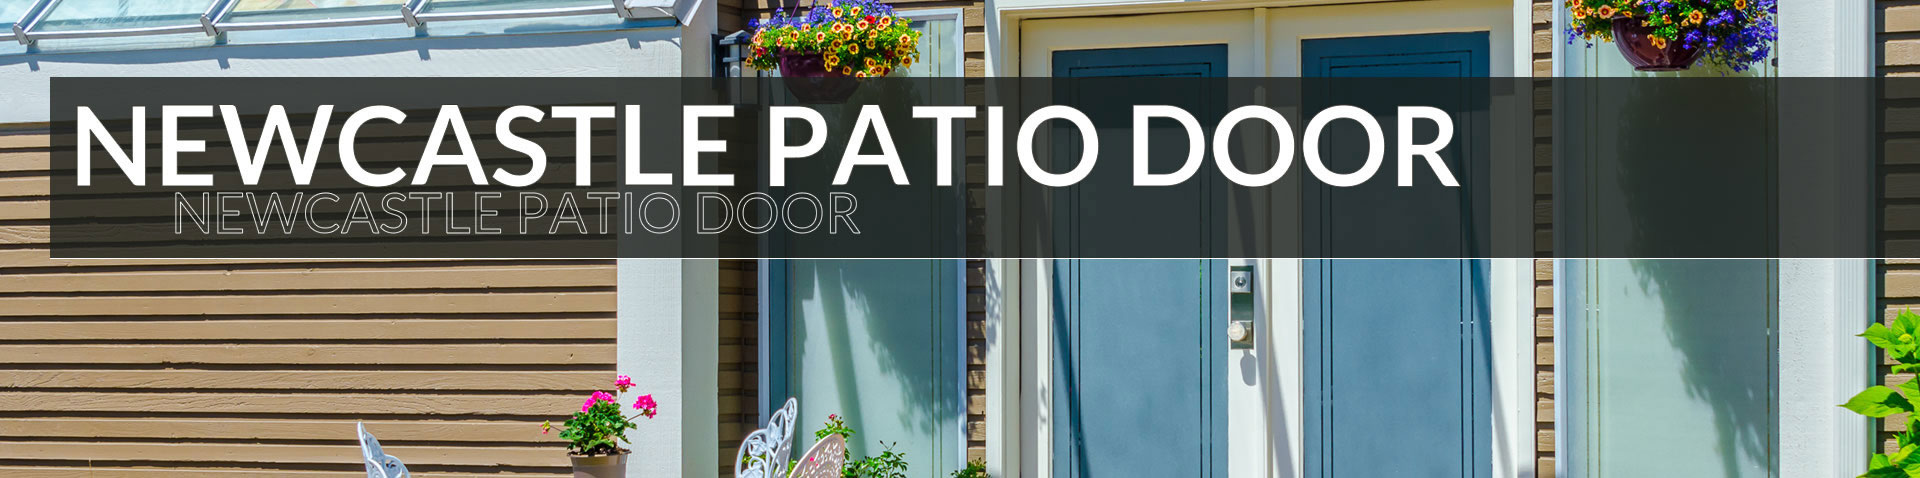 Newcastle Patio Doors - Turkstra Windows & Doors